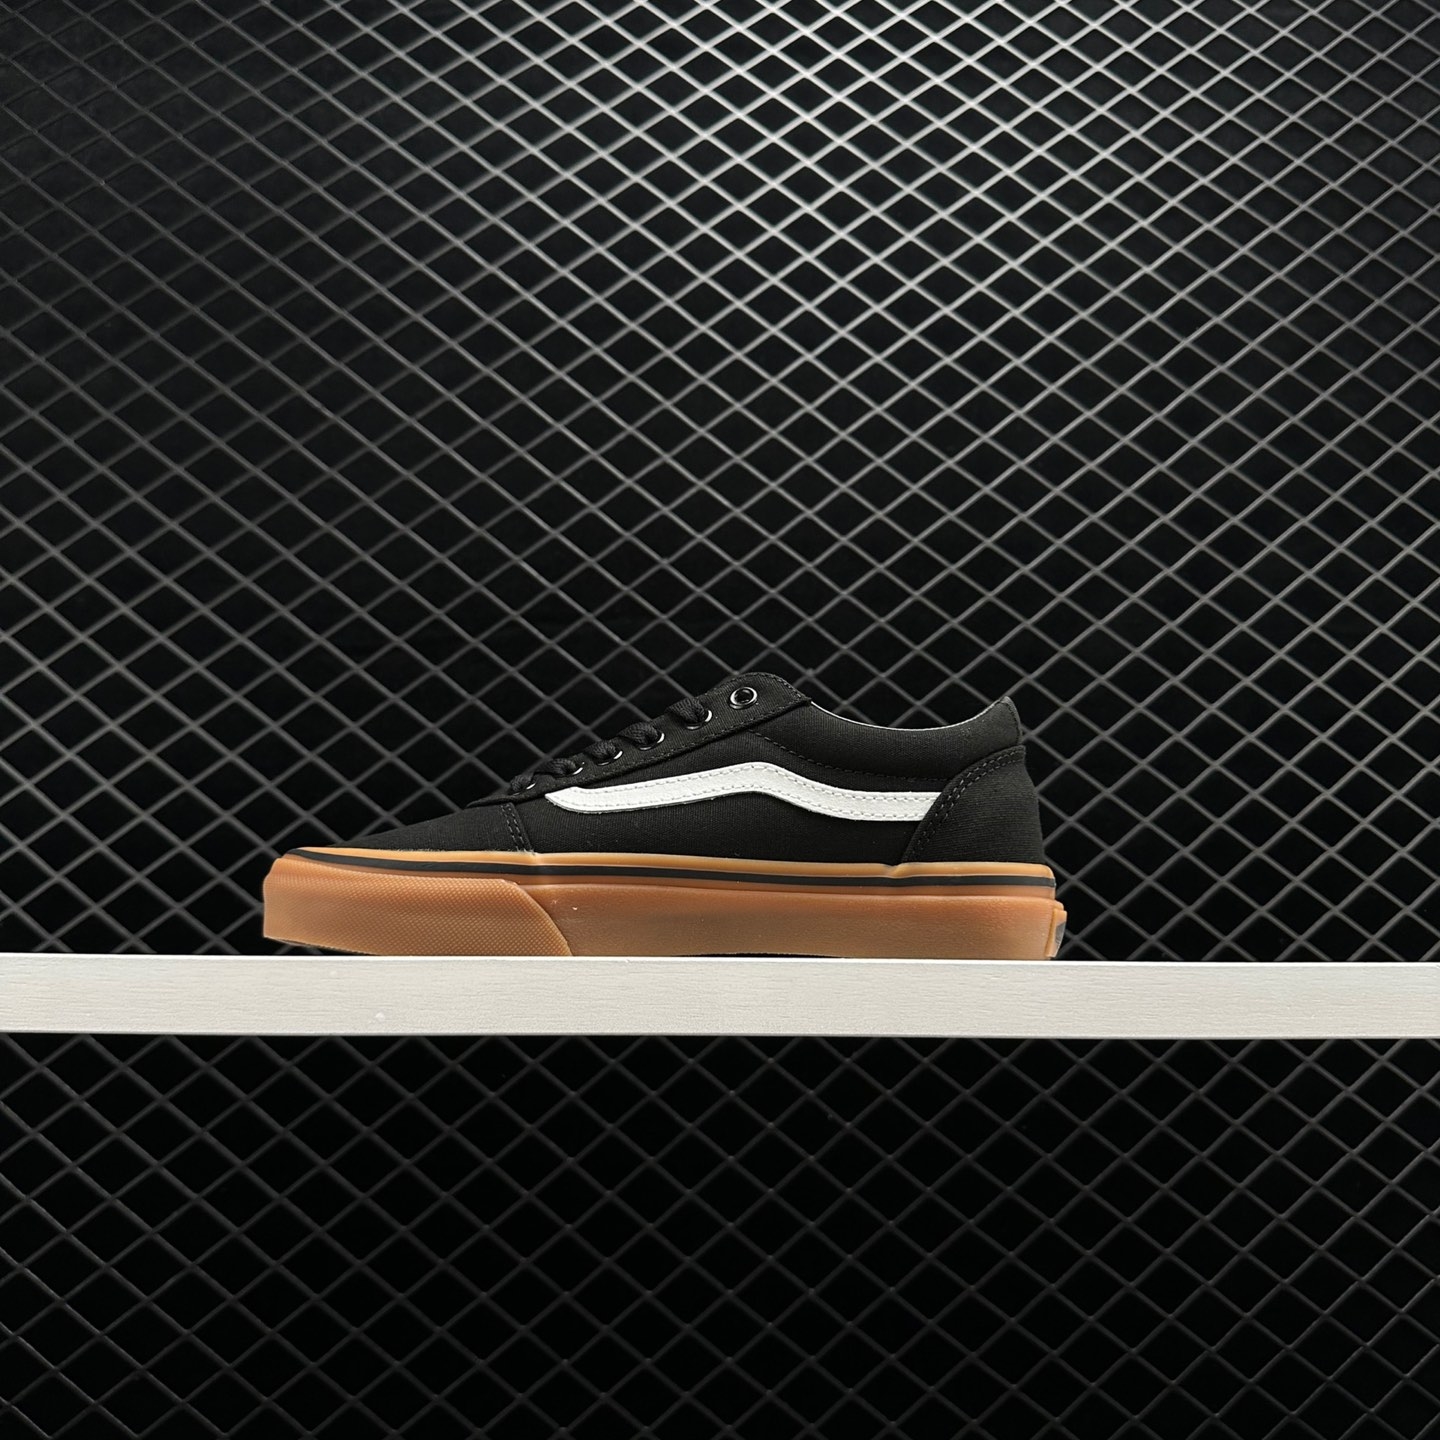 Vans Canvas Ward Black Gum - Stylish and Versatile Footwear